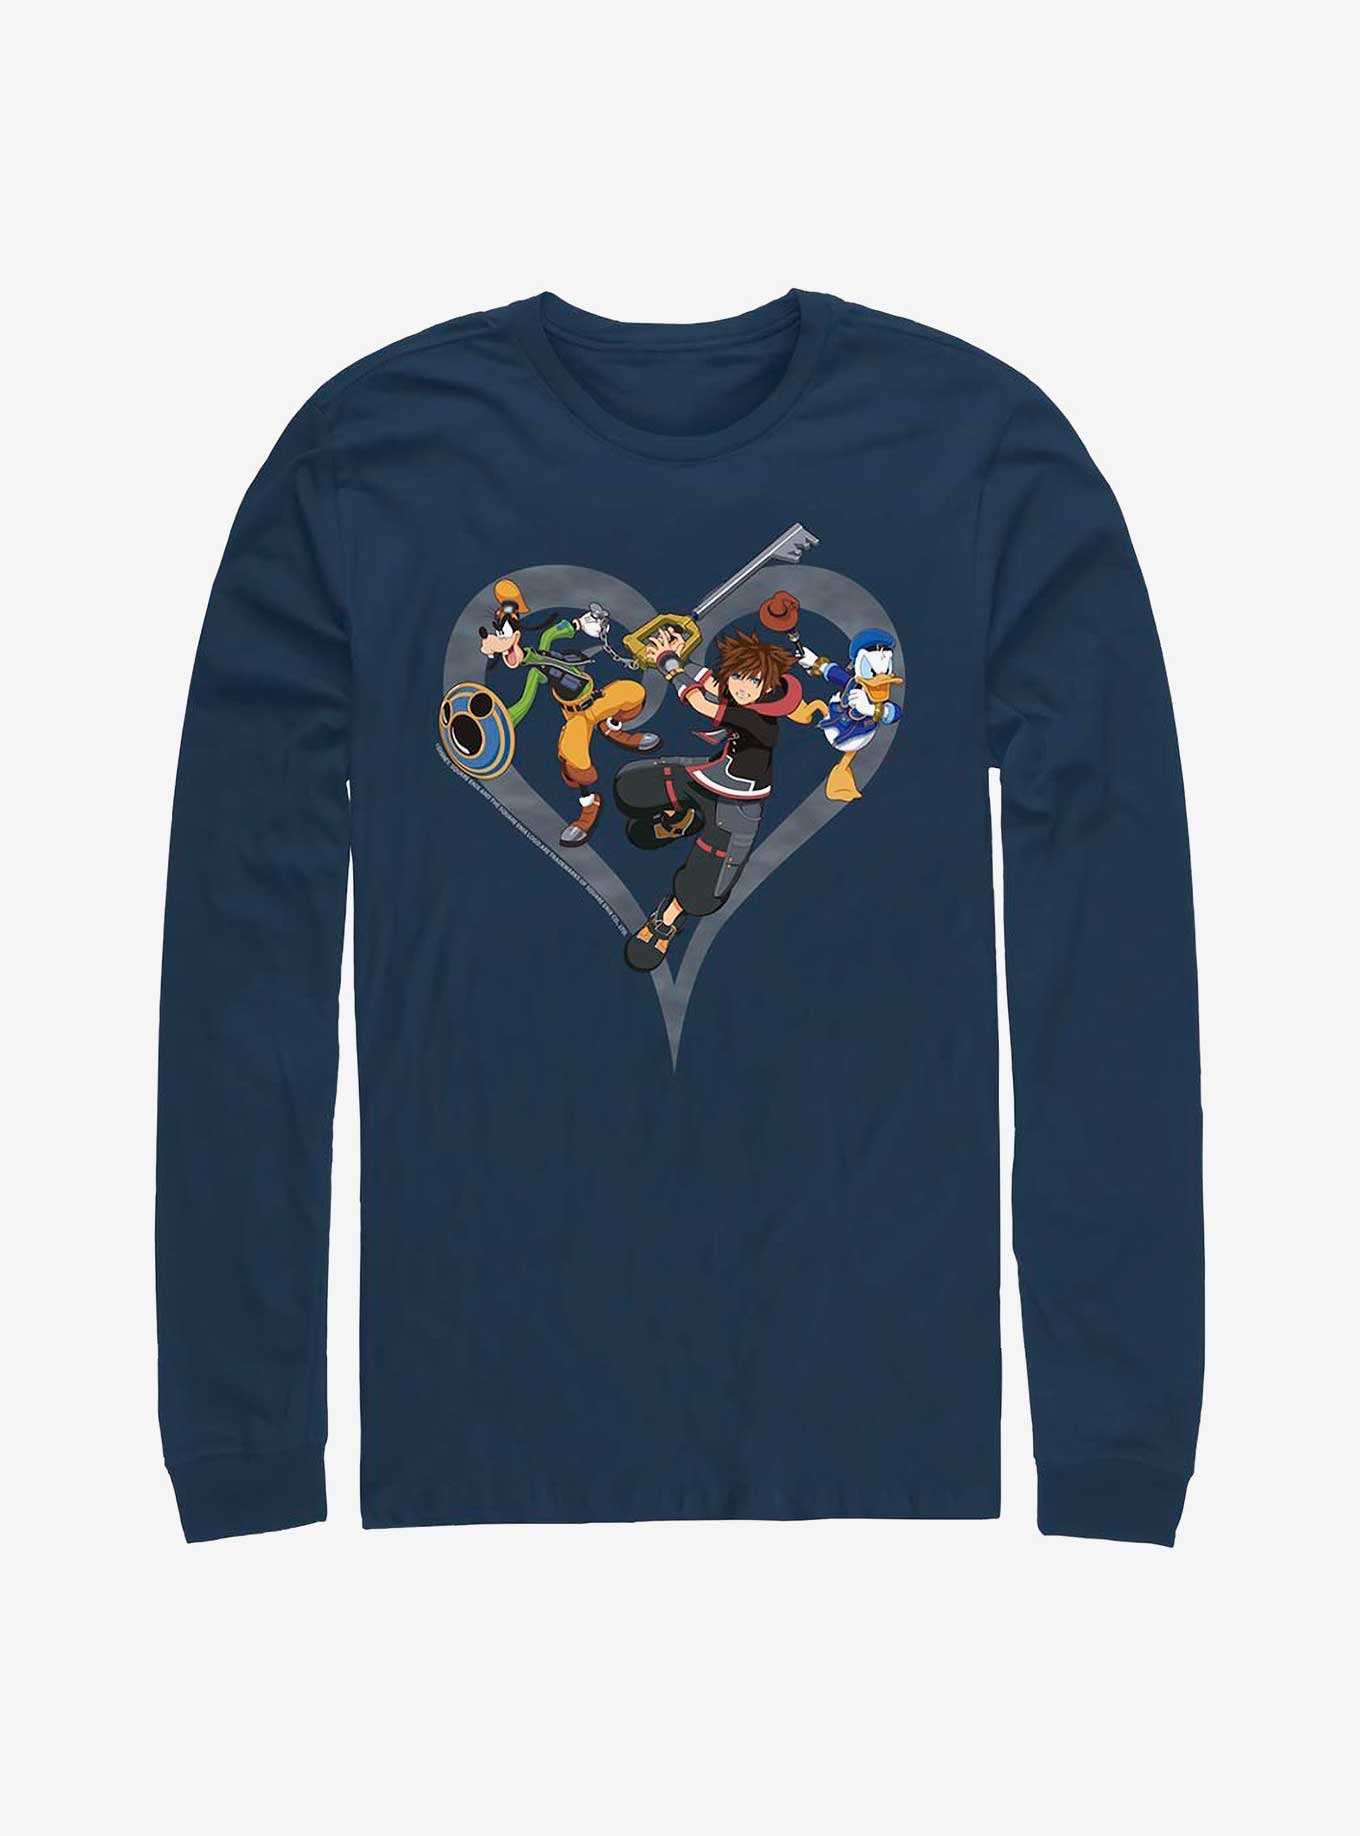 Disney Kingdom Hearts Sora Goofy Donald Attack Long-Sleeve T-Shirt, , hi-res